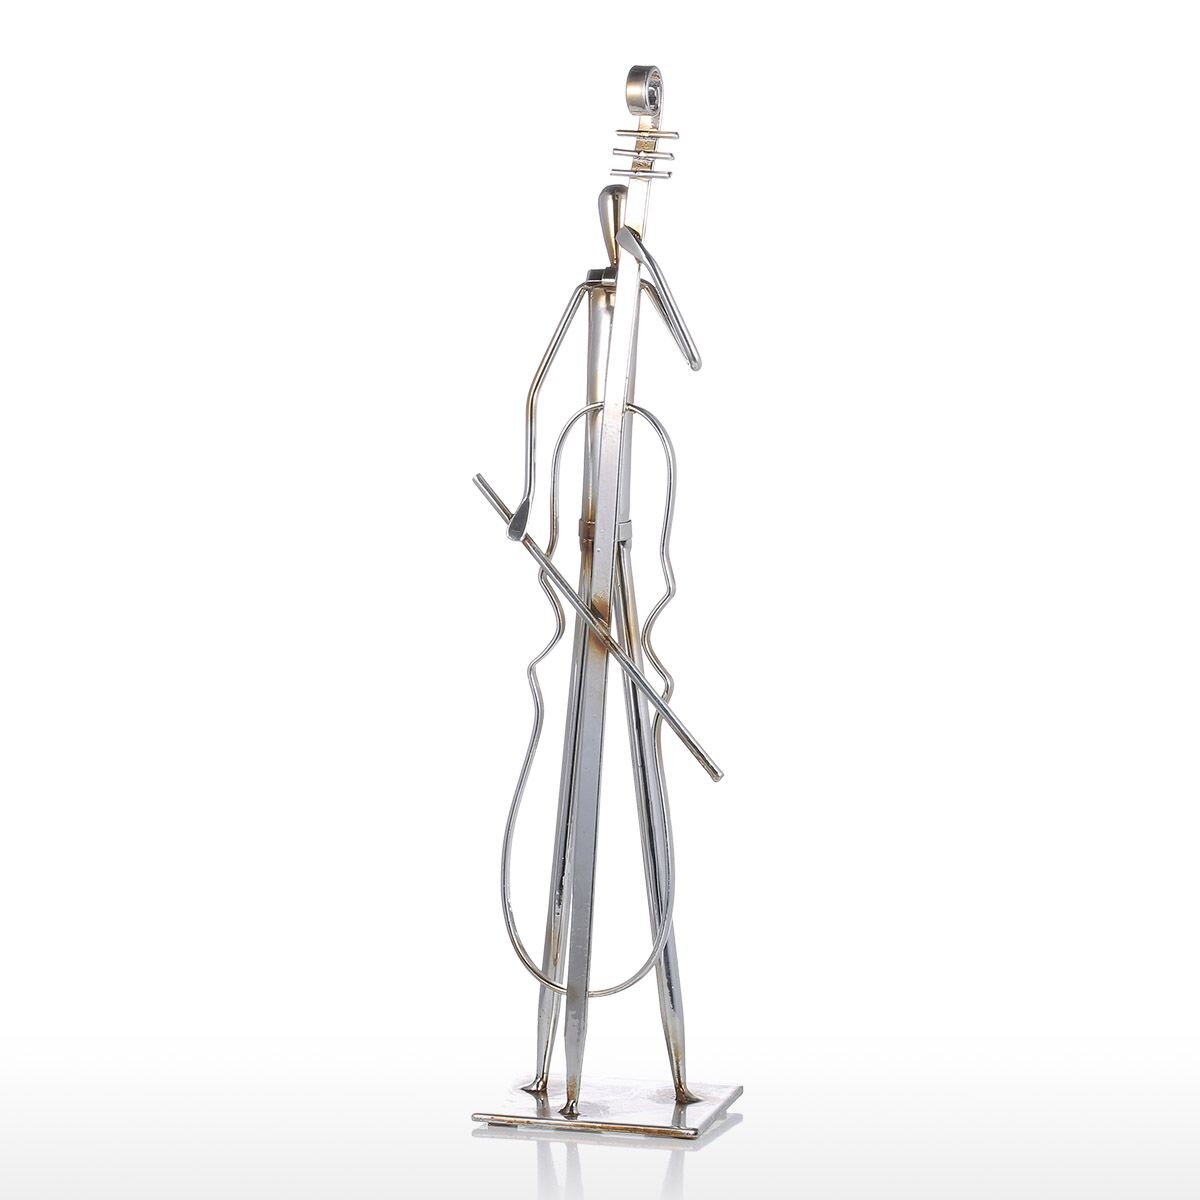 Tooarts Metal Sculpture Orchestra Cello Iron Sculpture Abstract Sculpture Modern Sculpture Band Instrument Home Ornament